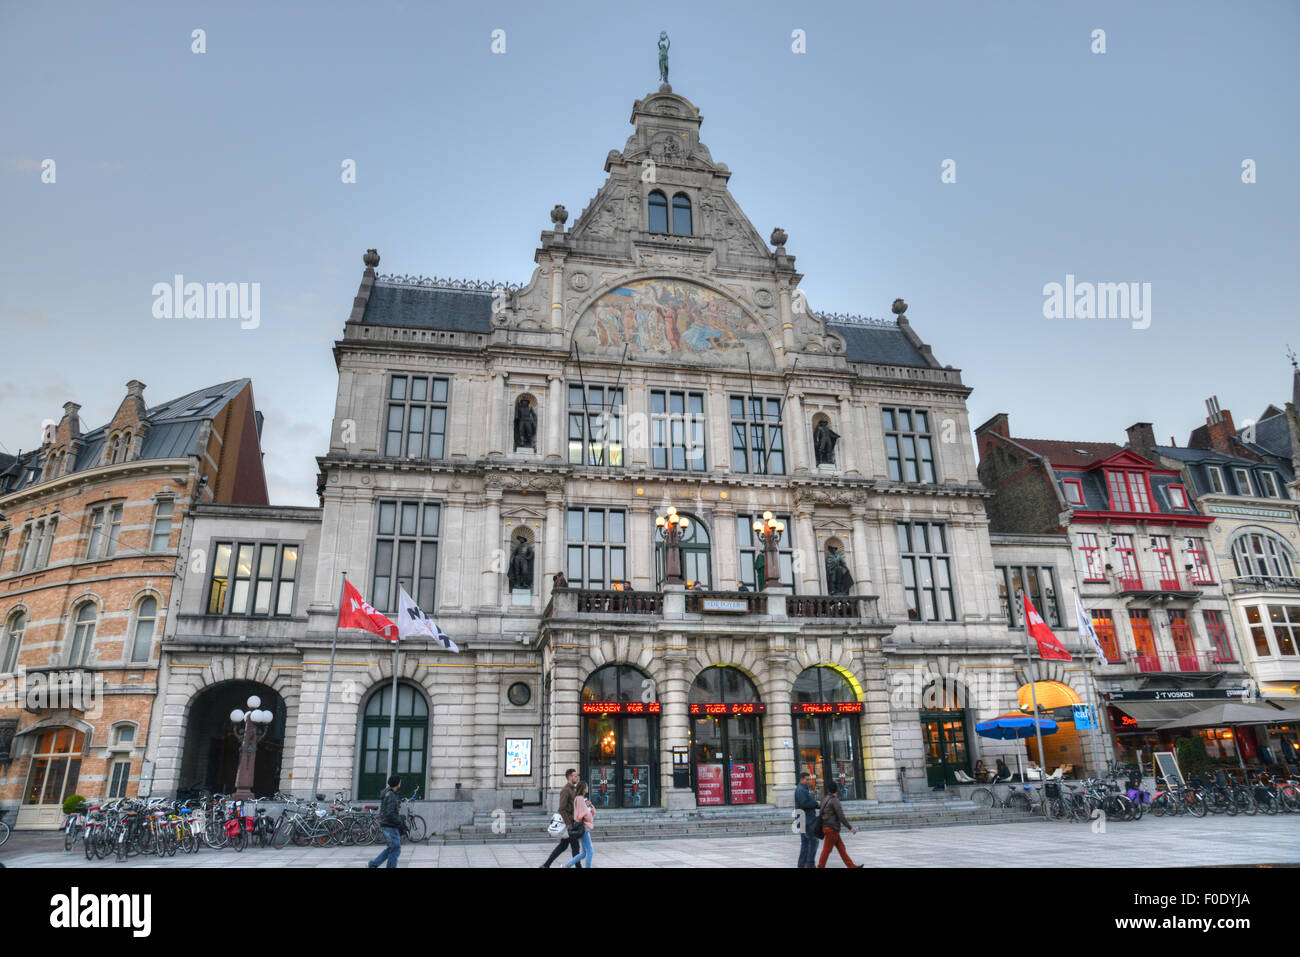 The Royal Dutch Theatre at Sint-Baafsplein (Town Square) in Ghent, Belgium Stock Photo